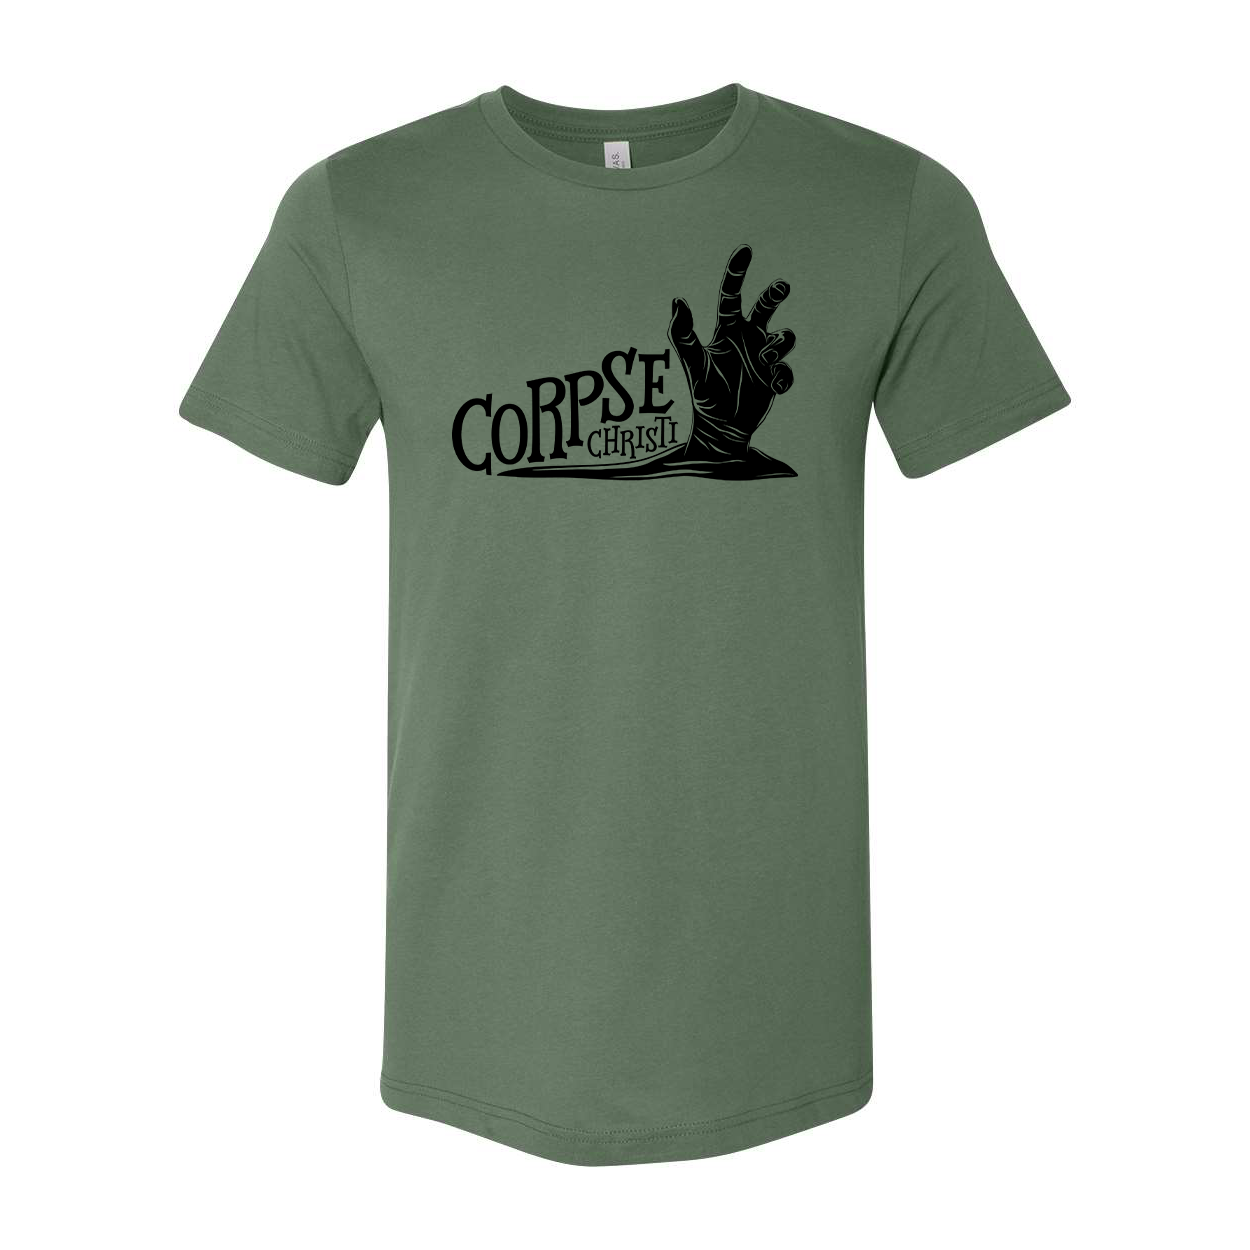 Corpse Christi – Halloween T-shirt